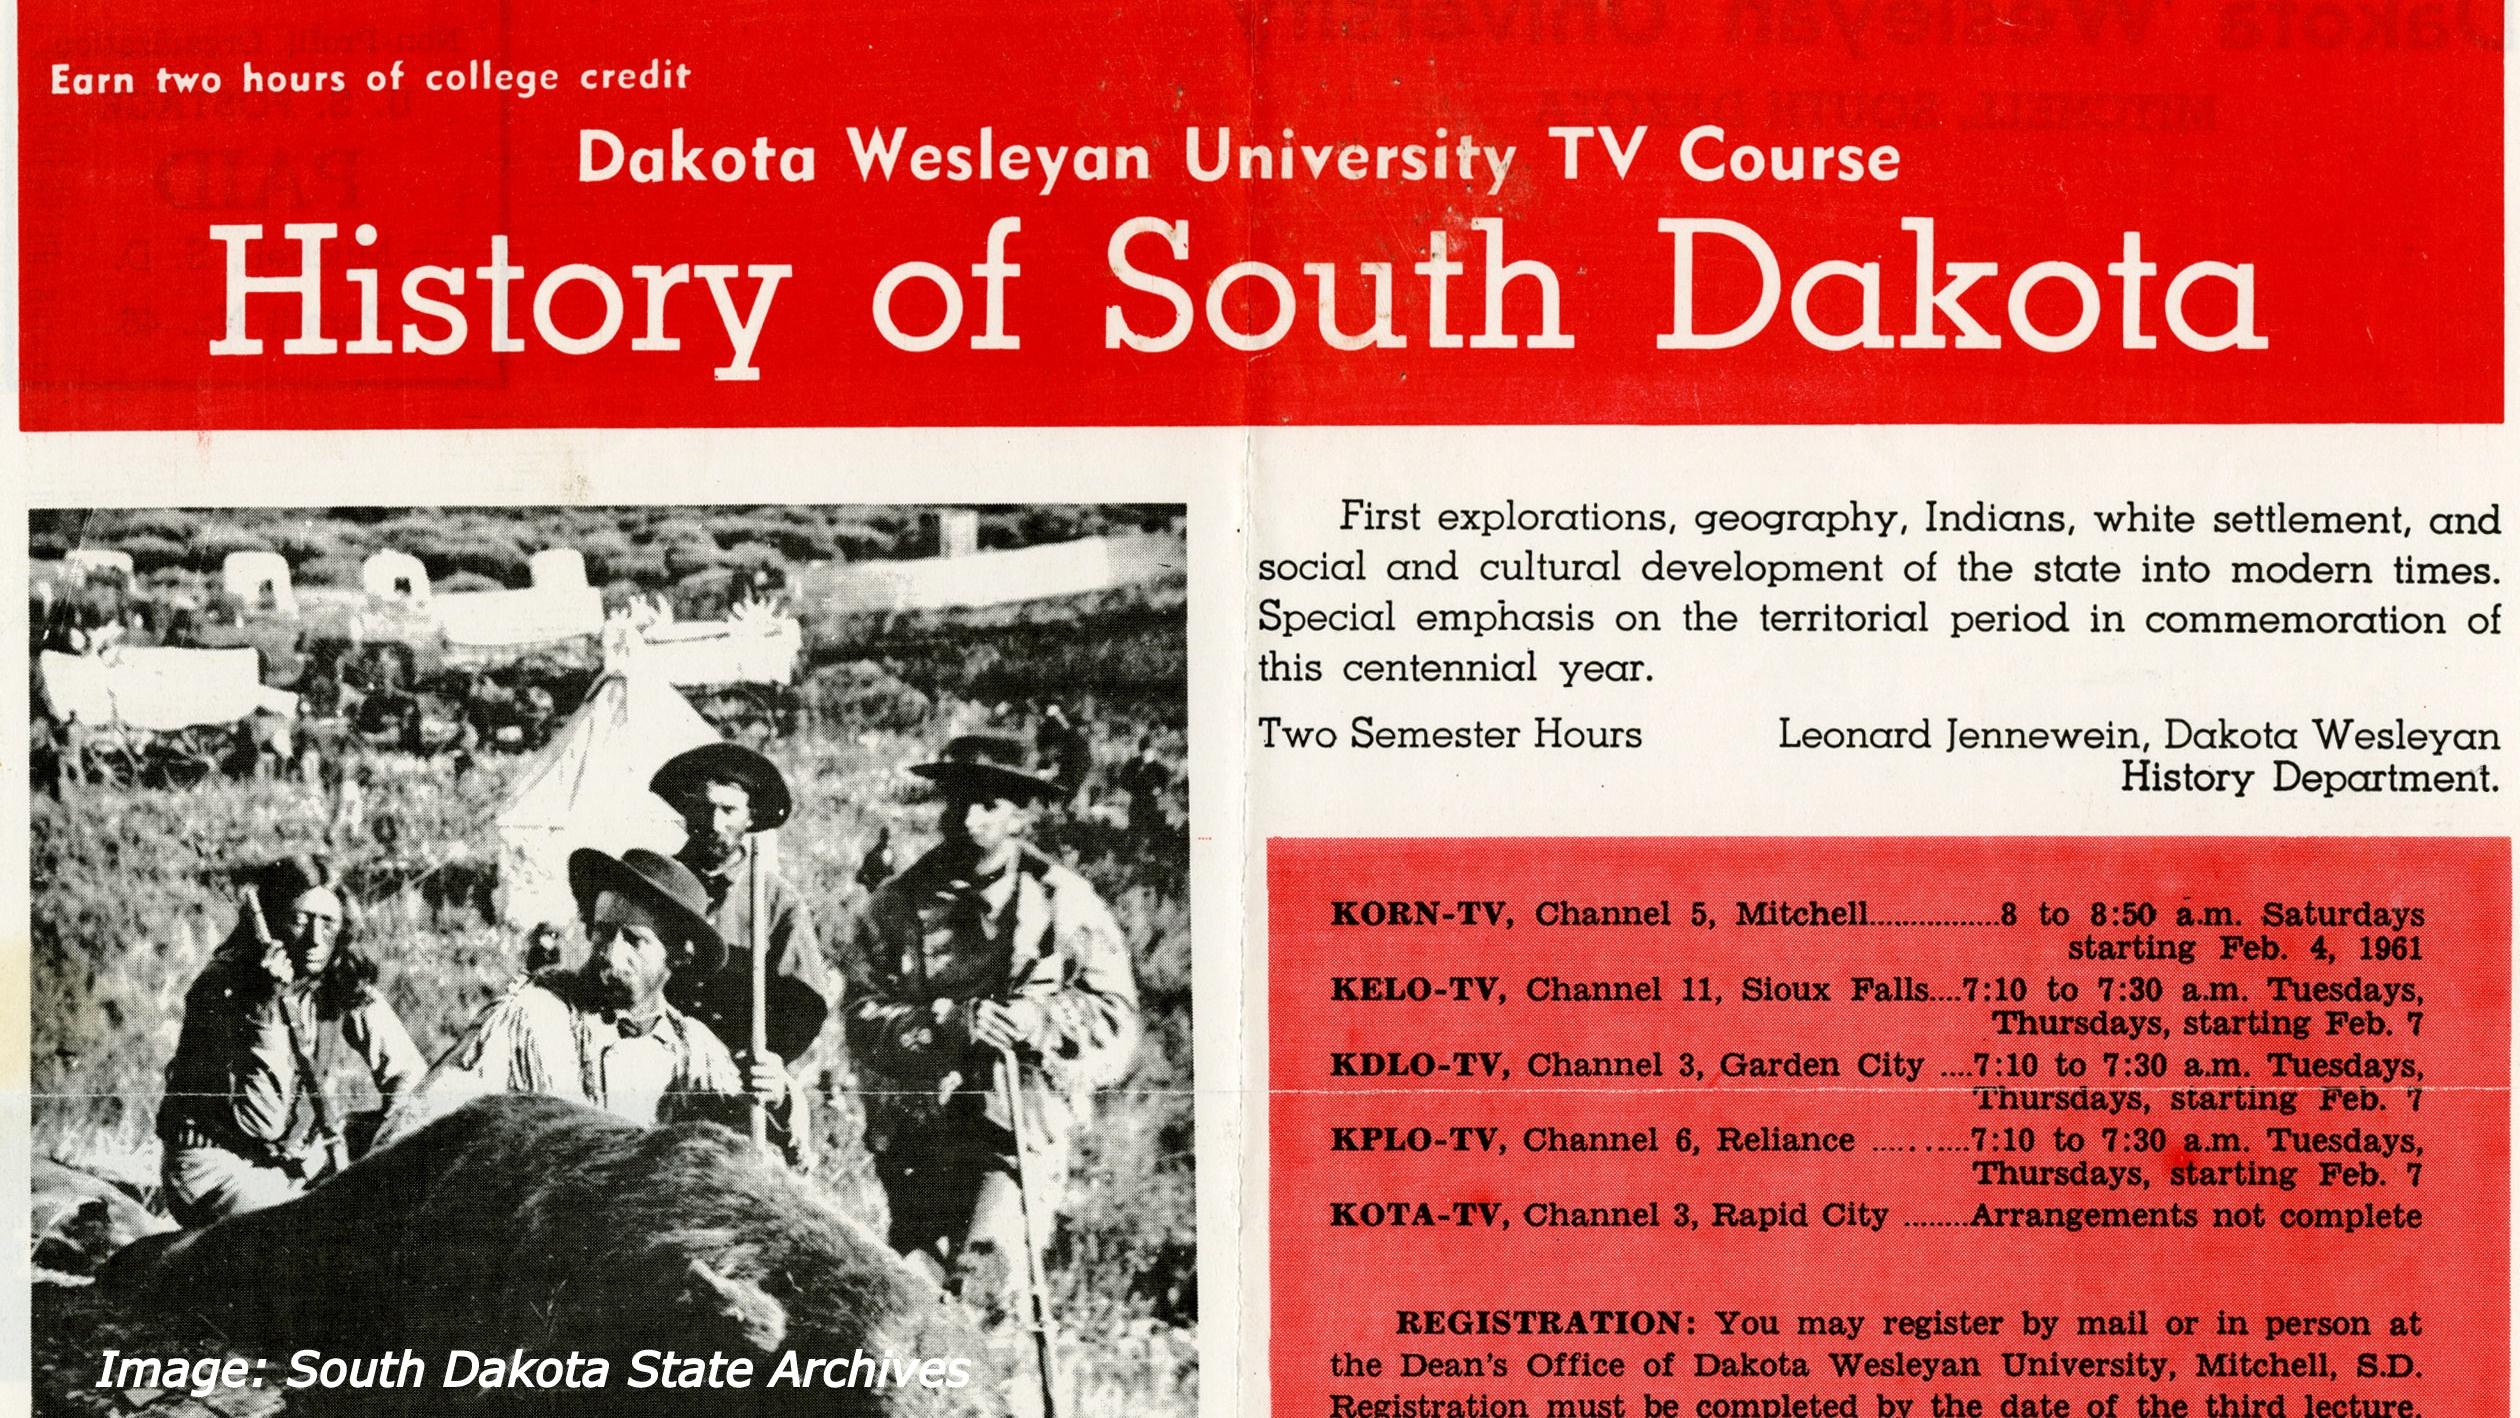 Dakota Wesleyan televised history course description of 1961.  